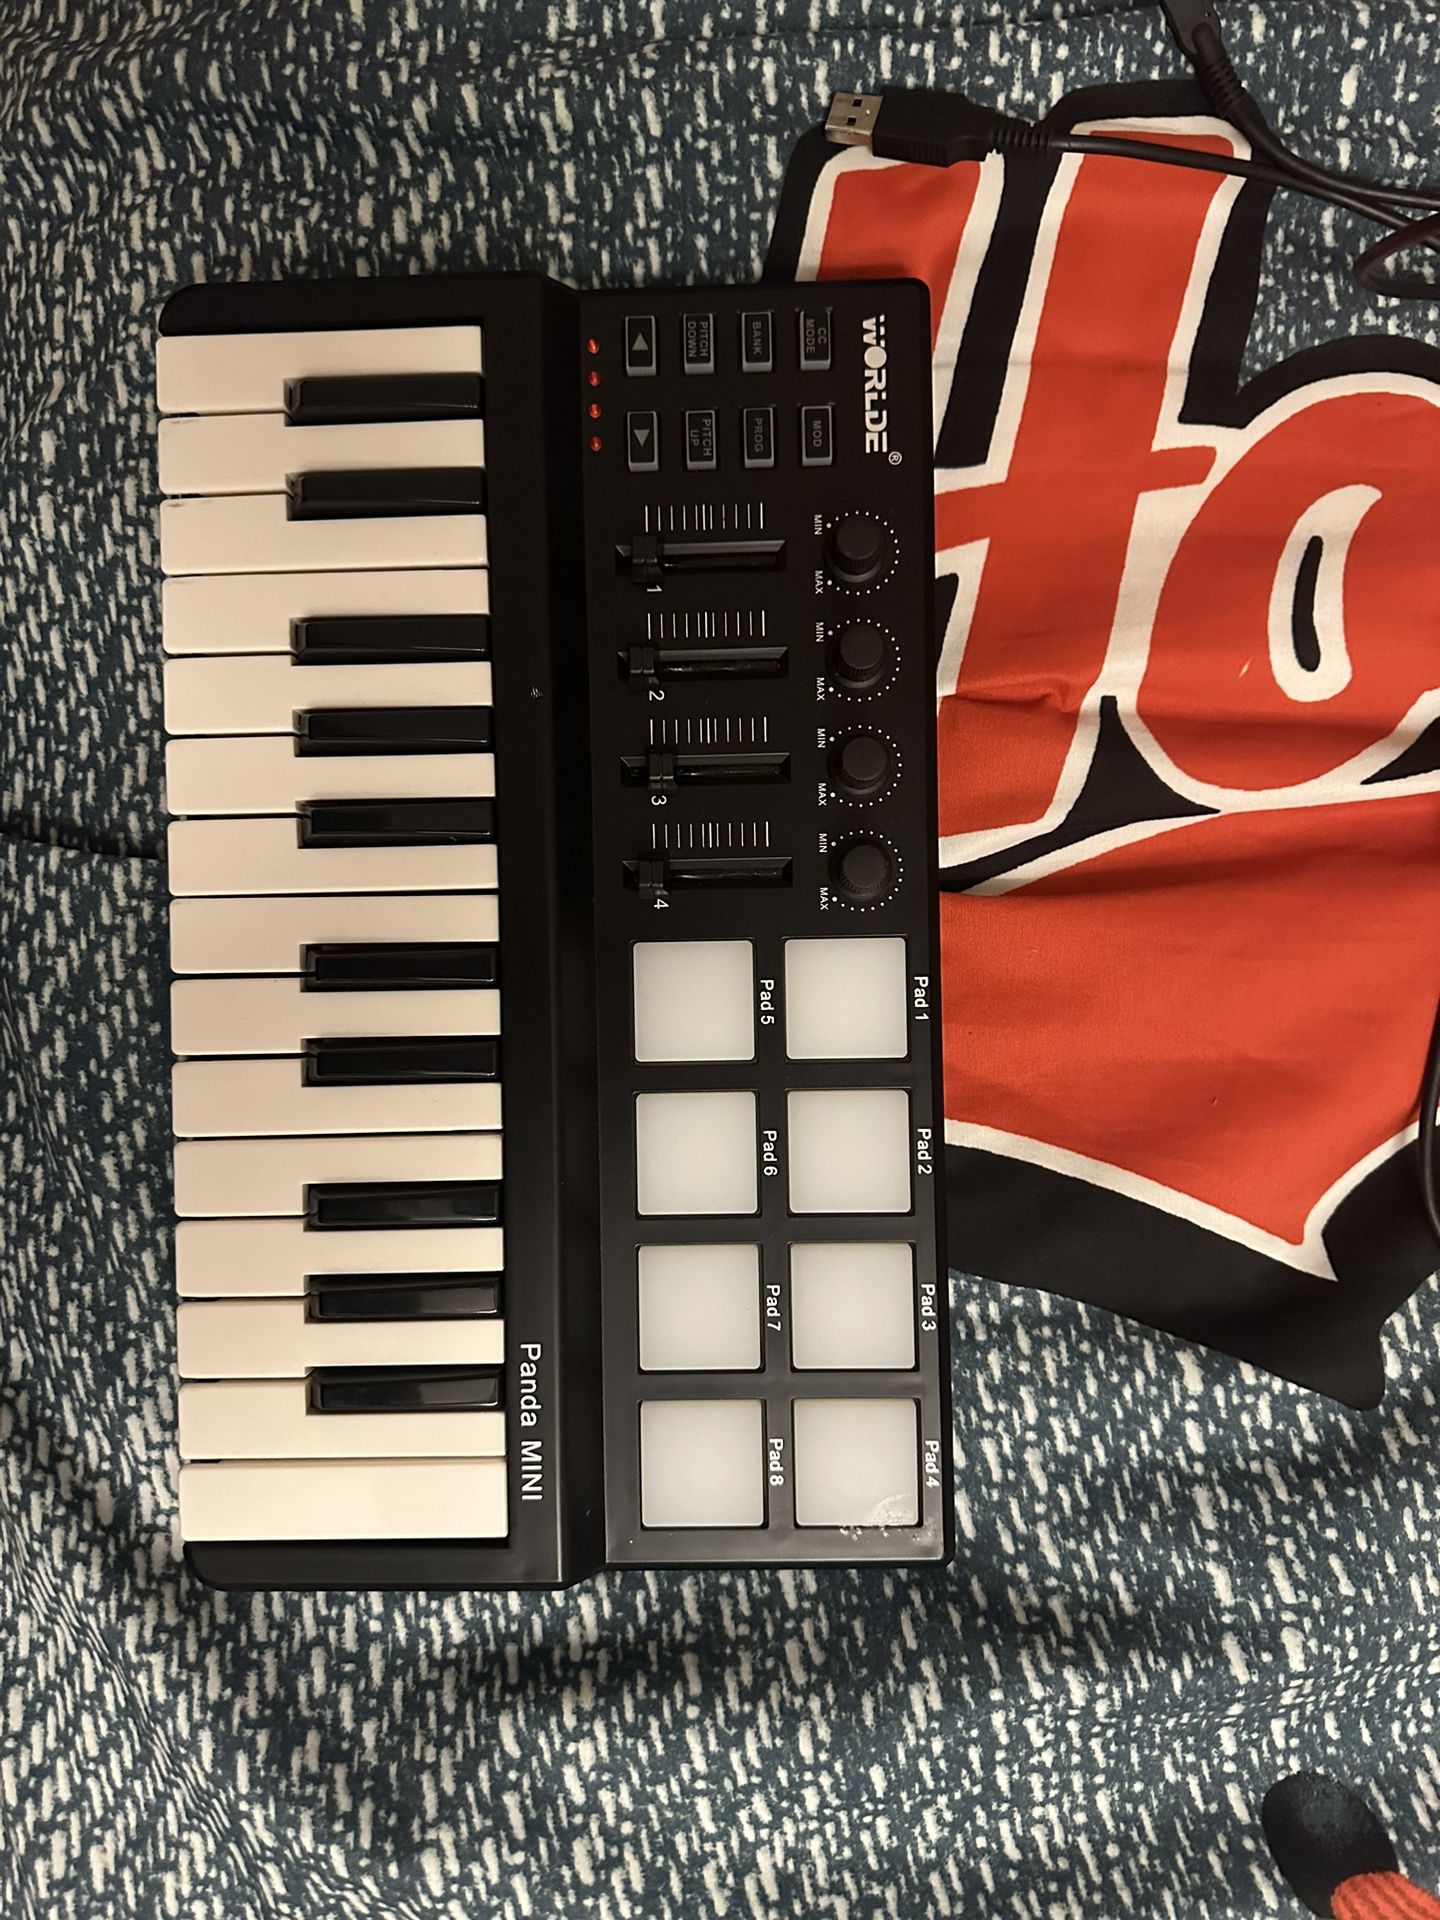 WorldE MIDI drumpad and keyboard